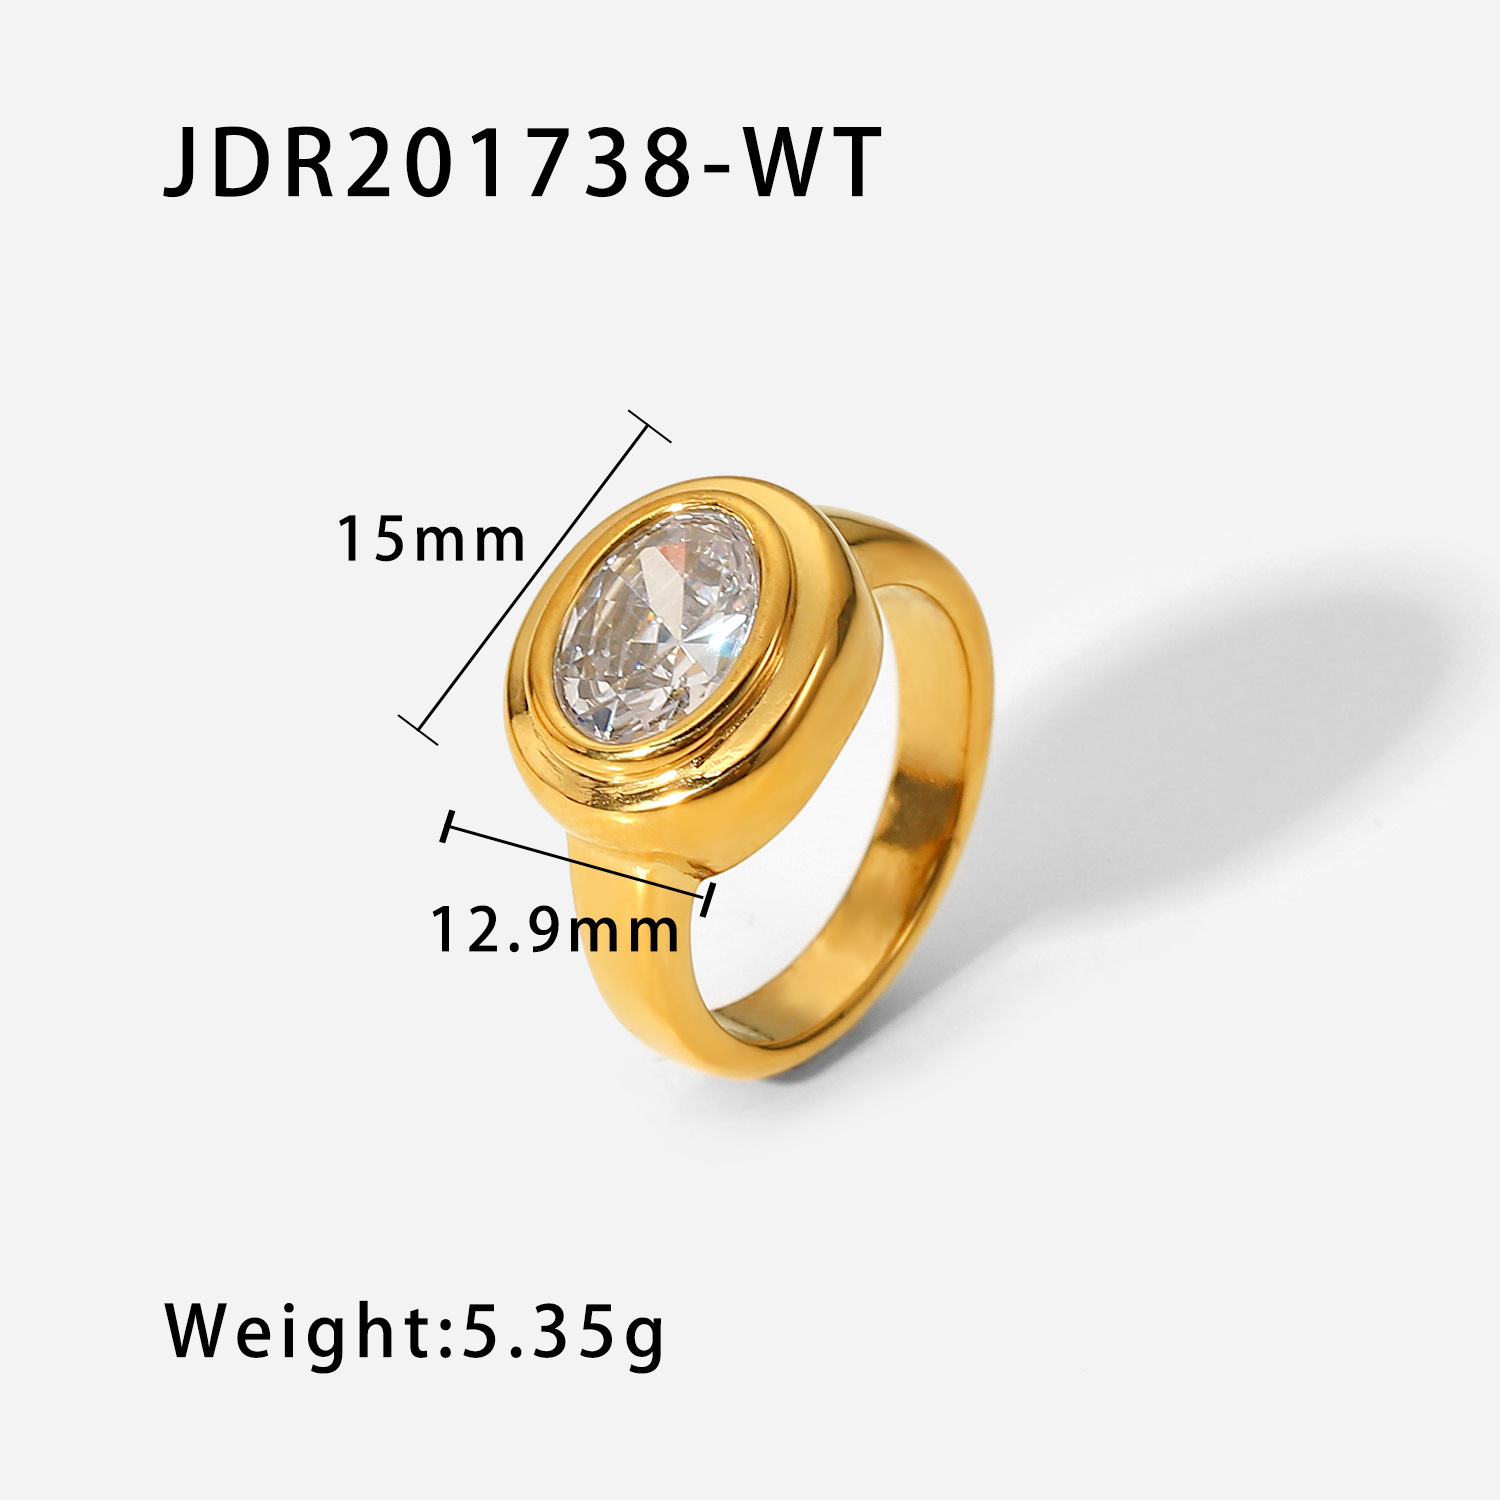 3:JDR201738-WT